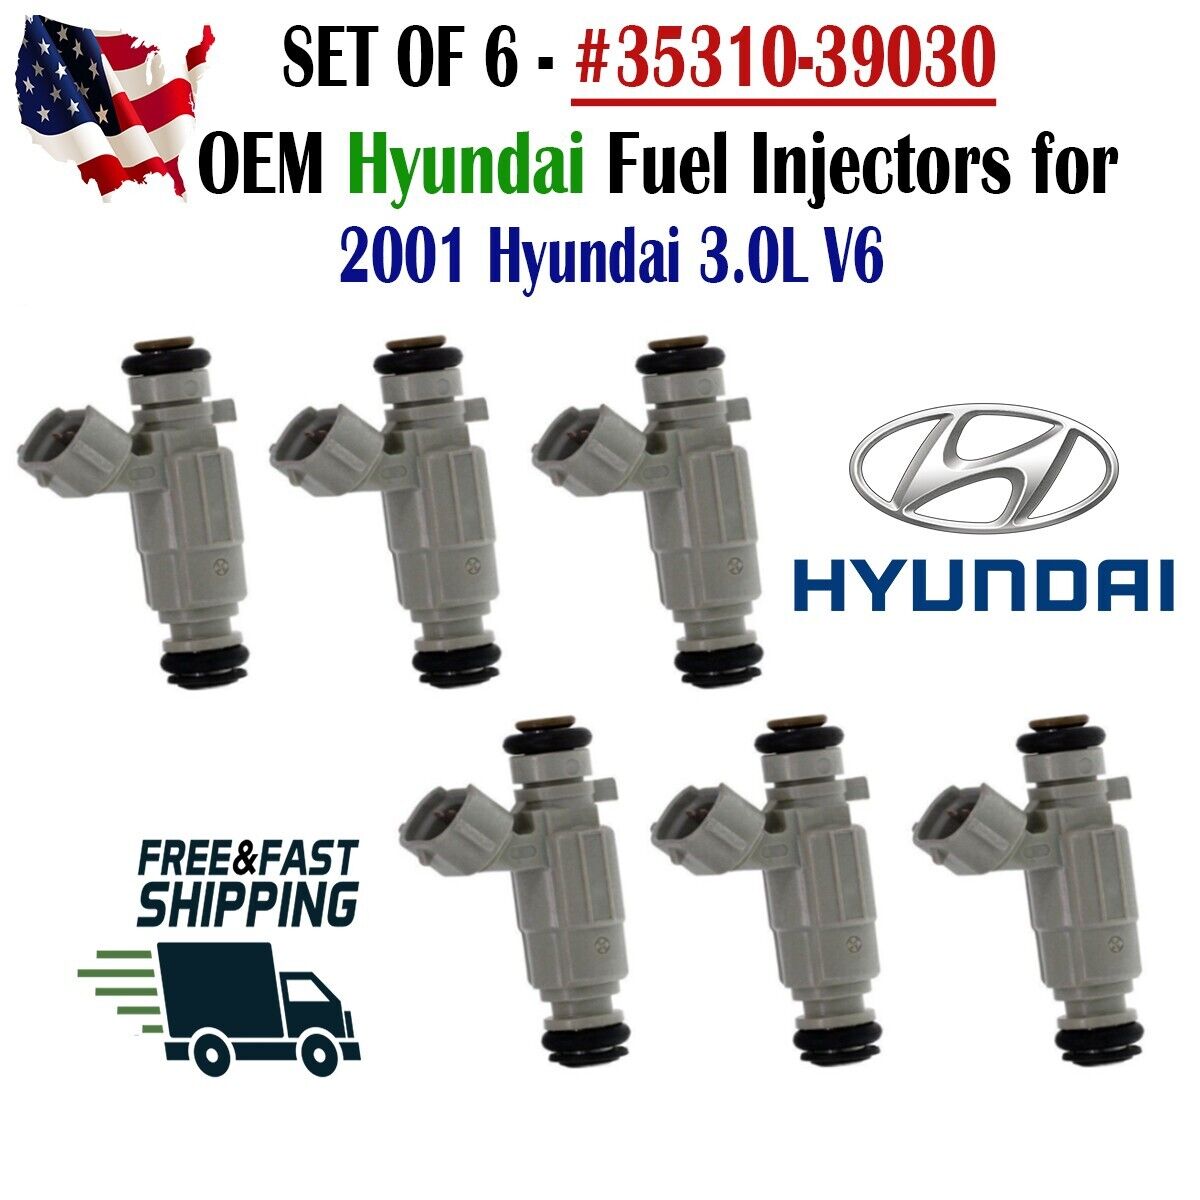 OEM Hyundai set of 6 Fuel Injectors for 2001 Hyundai XG300 3.0L V6 #35310-39030